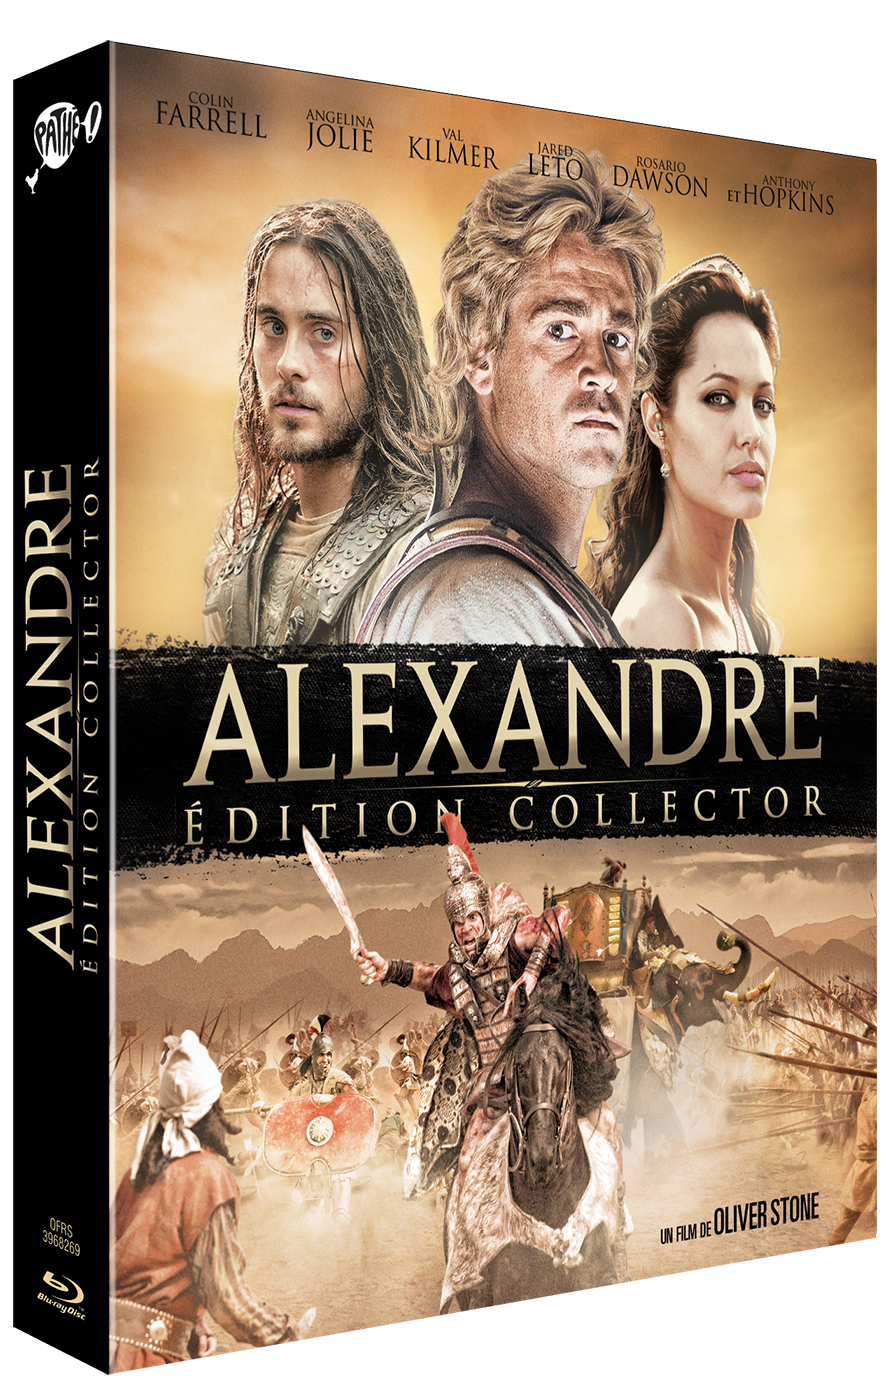 ALEXANDRE-EDITION COLLECTOR  3  FILMS - BRD